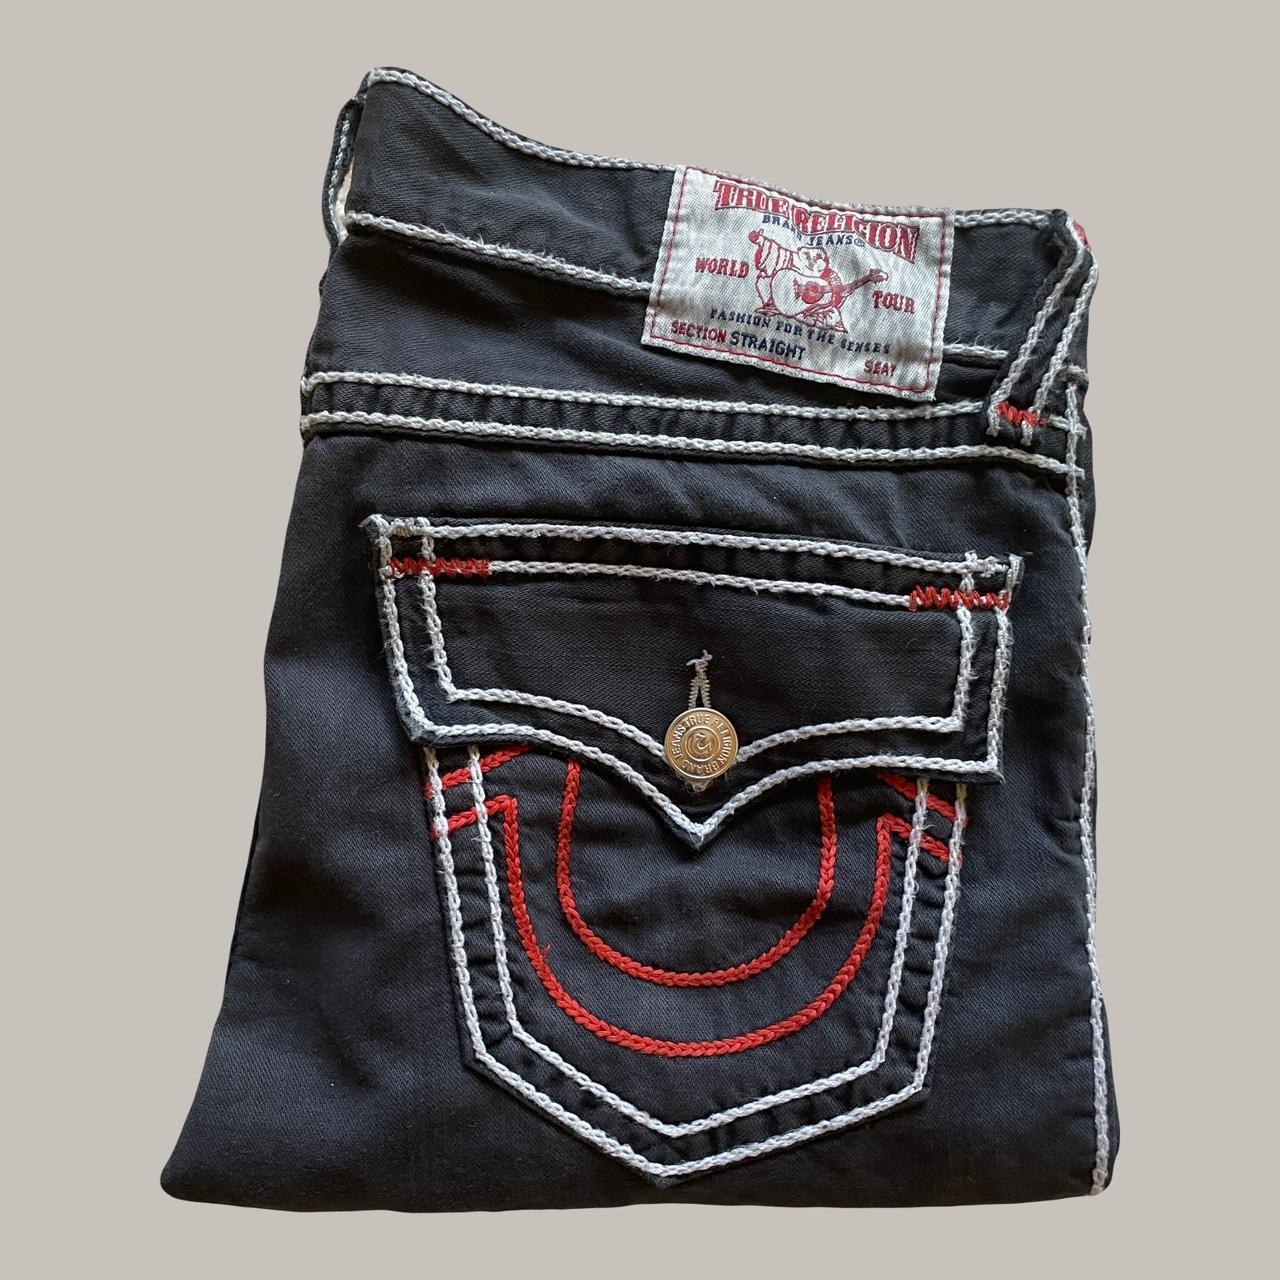 True religion rope stitch jeans Black jeans custom... - Depop